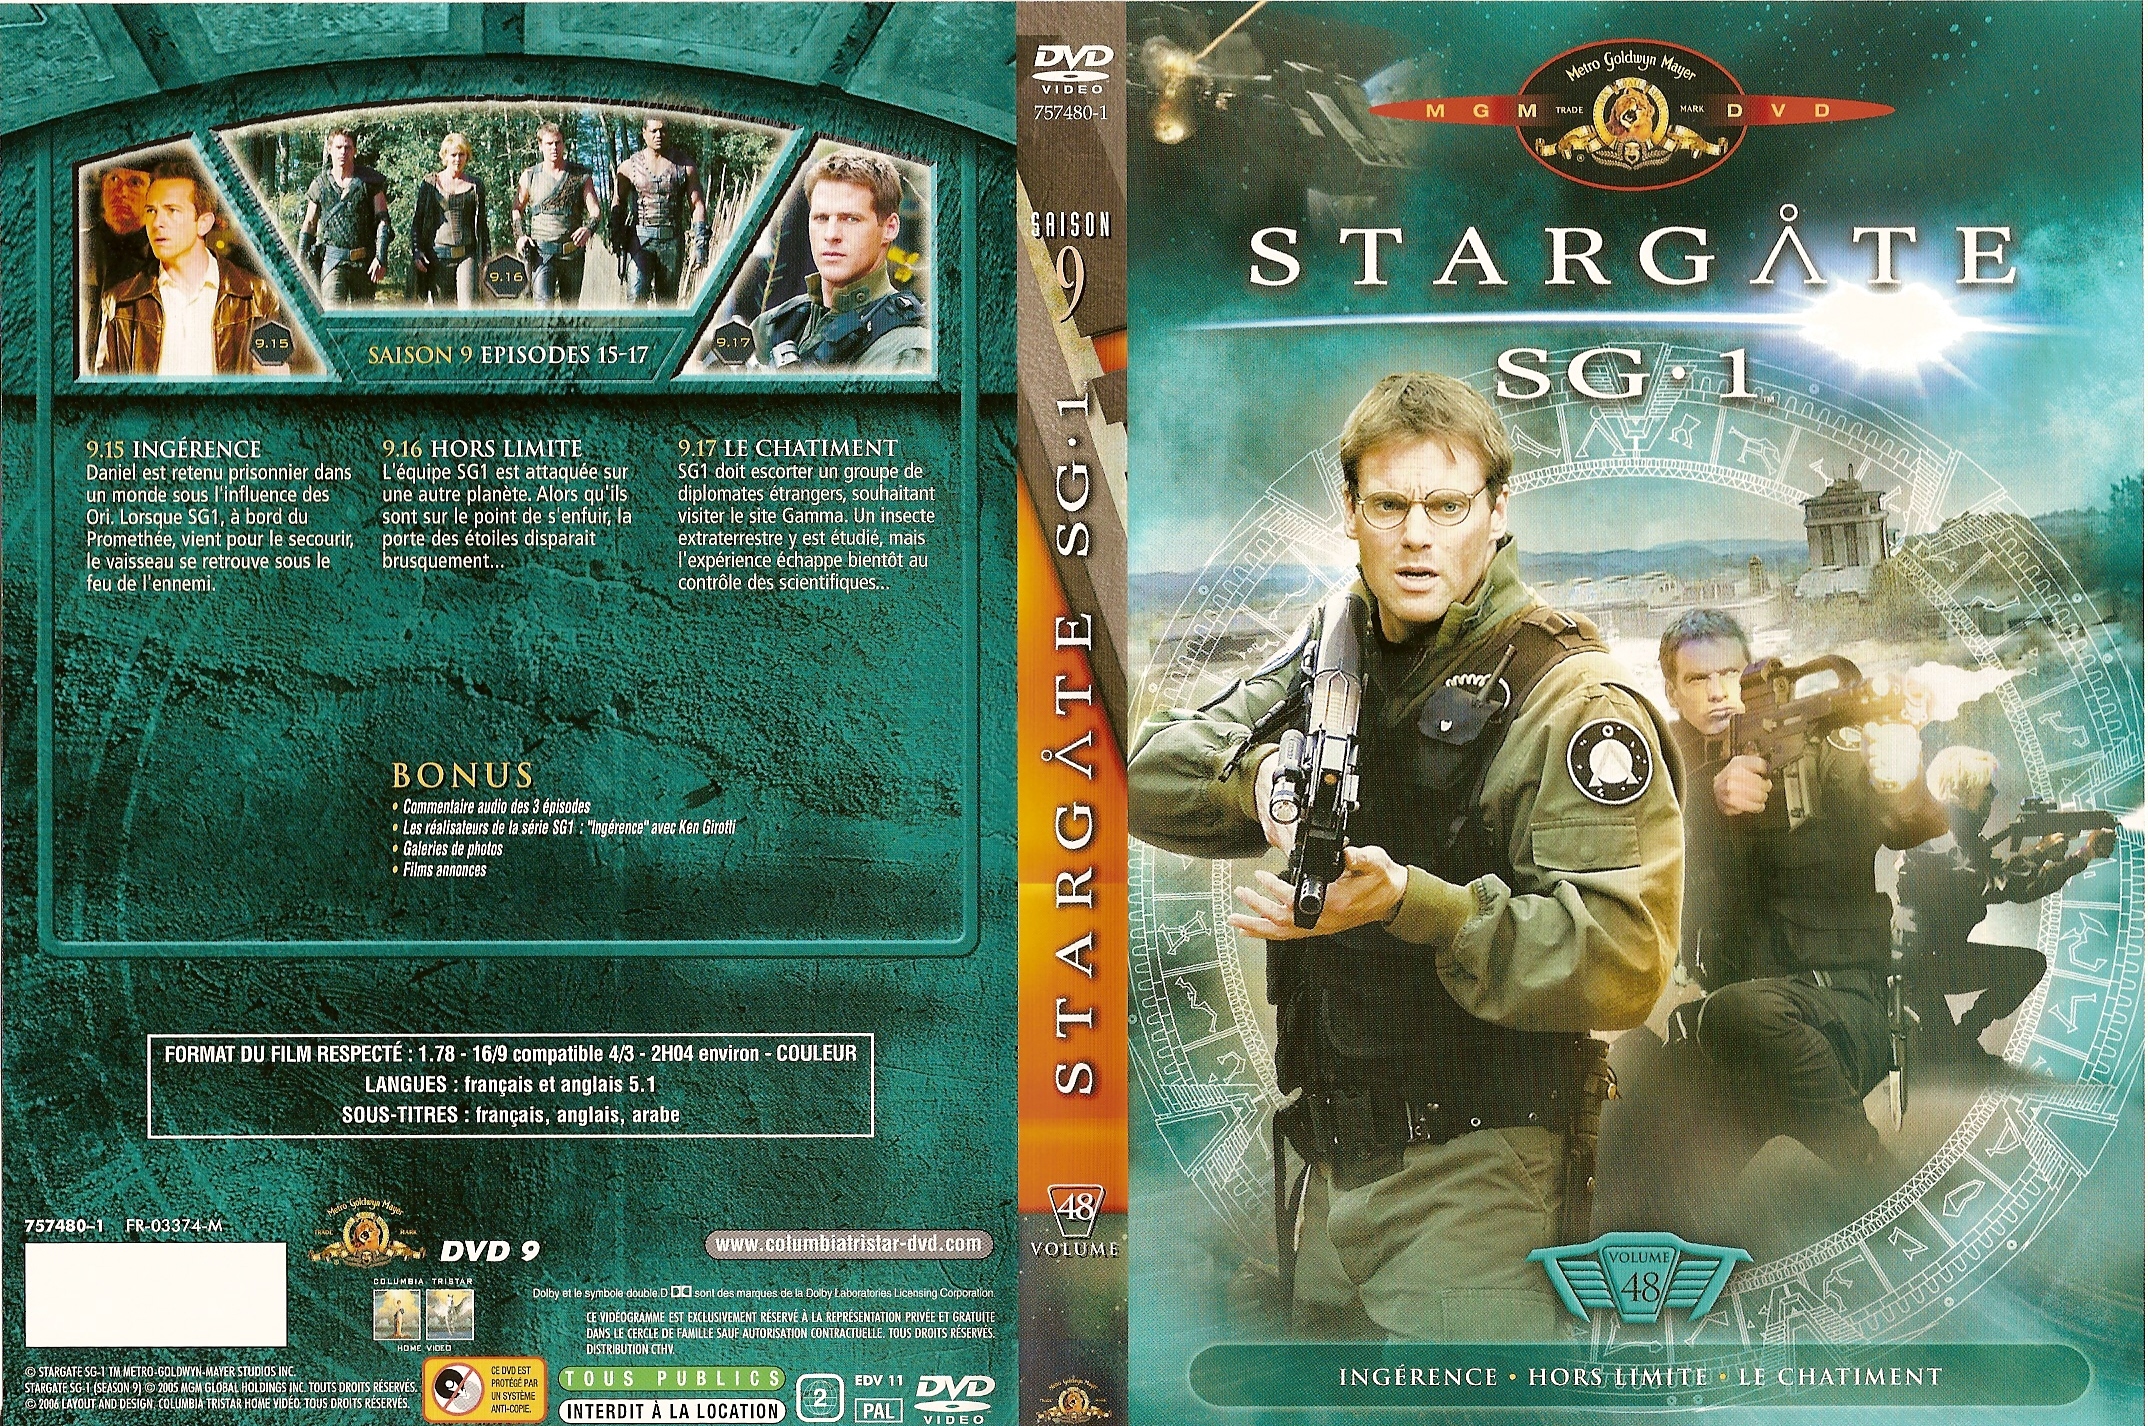 Jaquette DVD Stargate SG1 vol 48